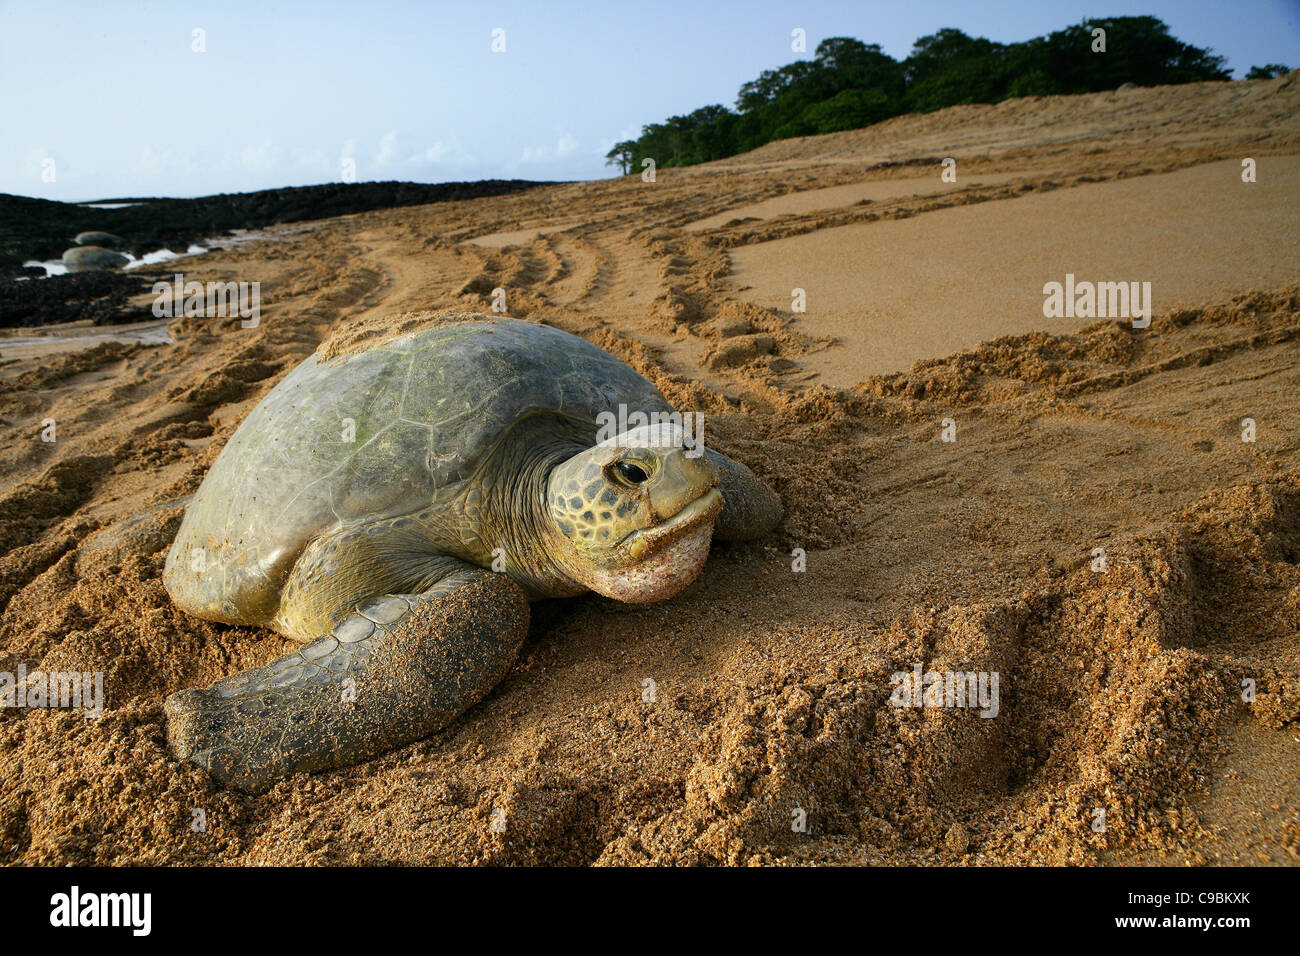 Africa, Guinea-Bissau, Green sea turtle in sand Stock Photo